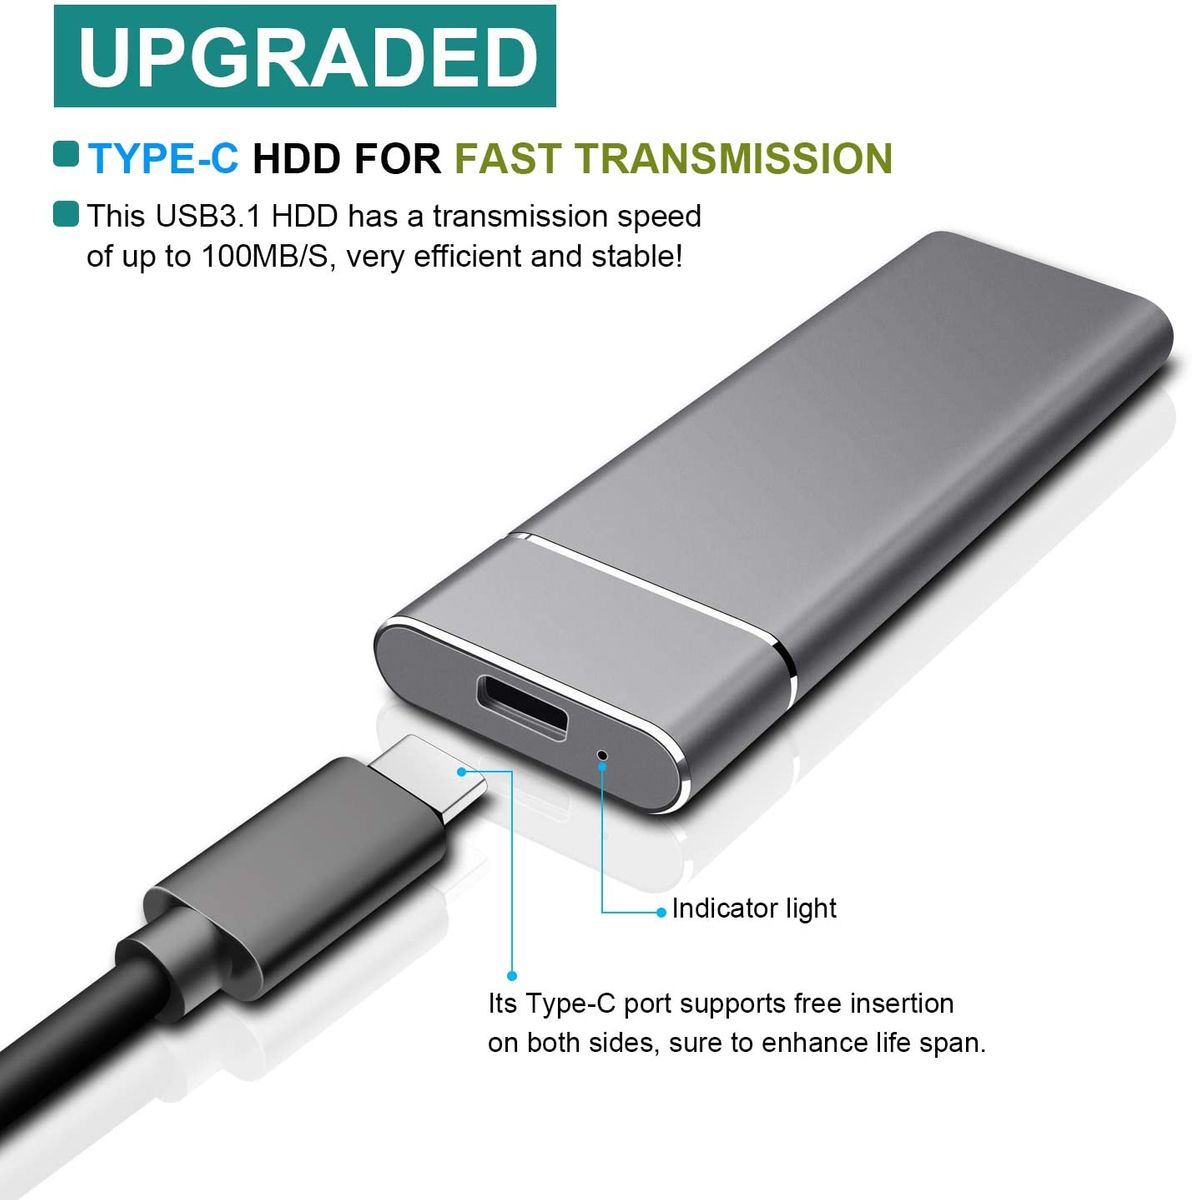 Neeta 2TB External Hard Drive Portable Ultra Slim Type C USB 3.1 Hard Drive for PC, Mac, Windows, Apple, Xbox One S (2 TB, silver)